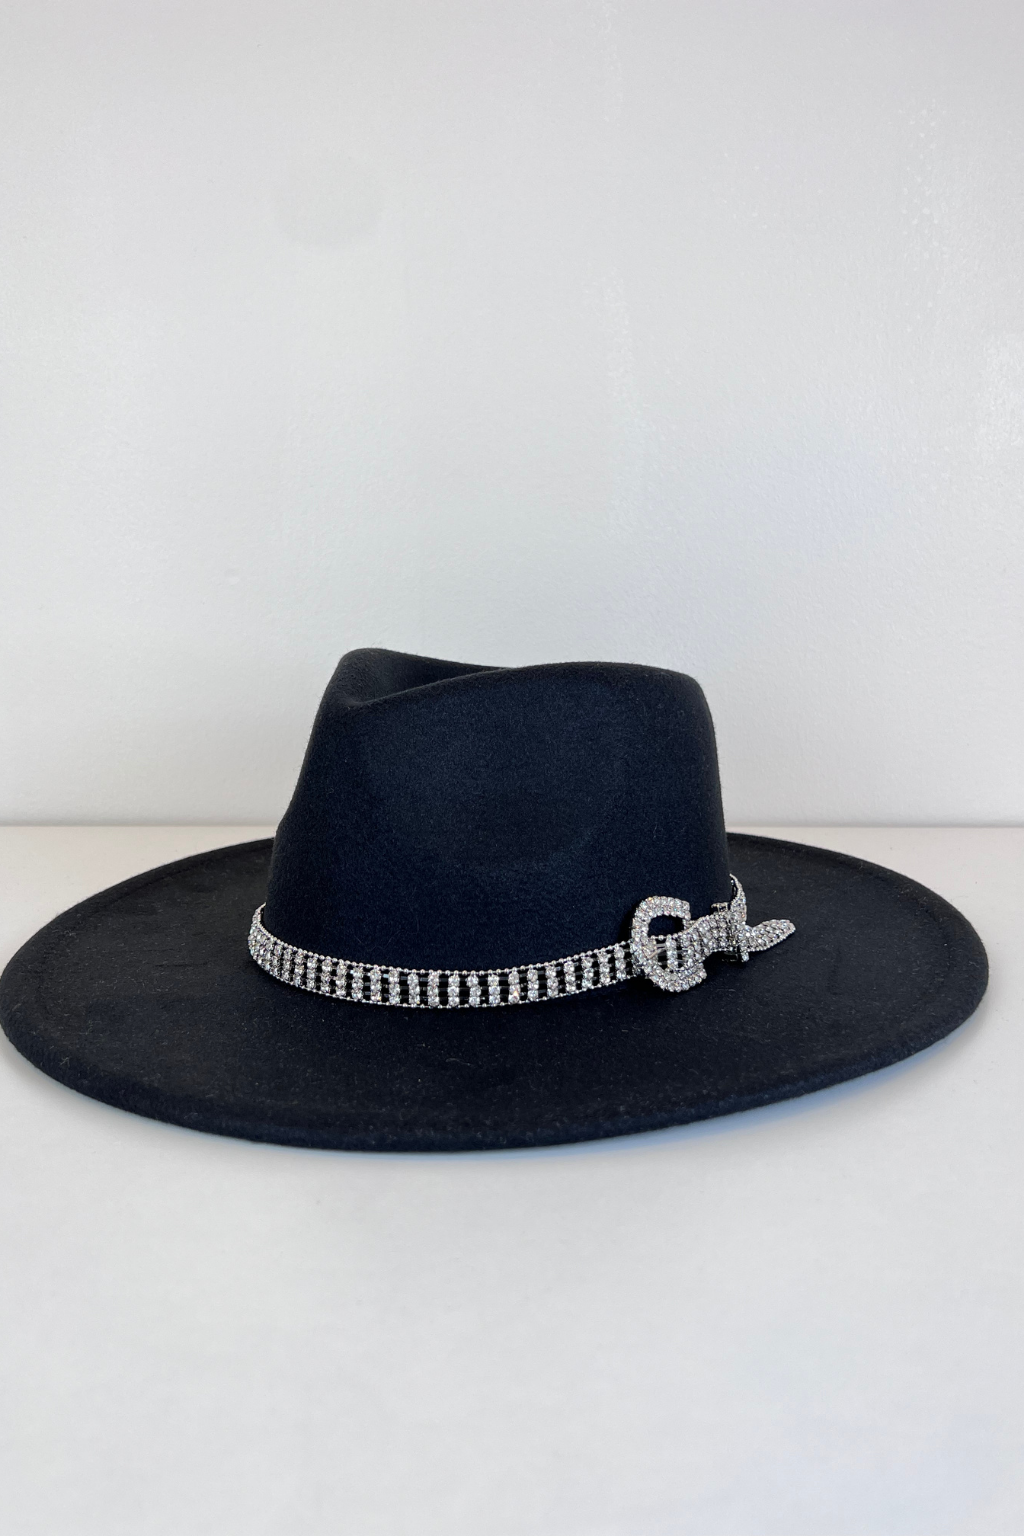 Black Rhinestone Chain Fedora Hat